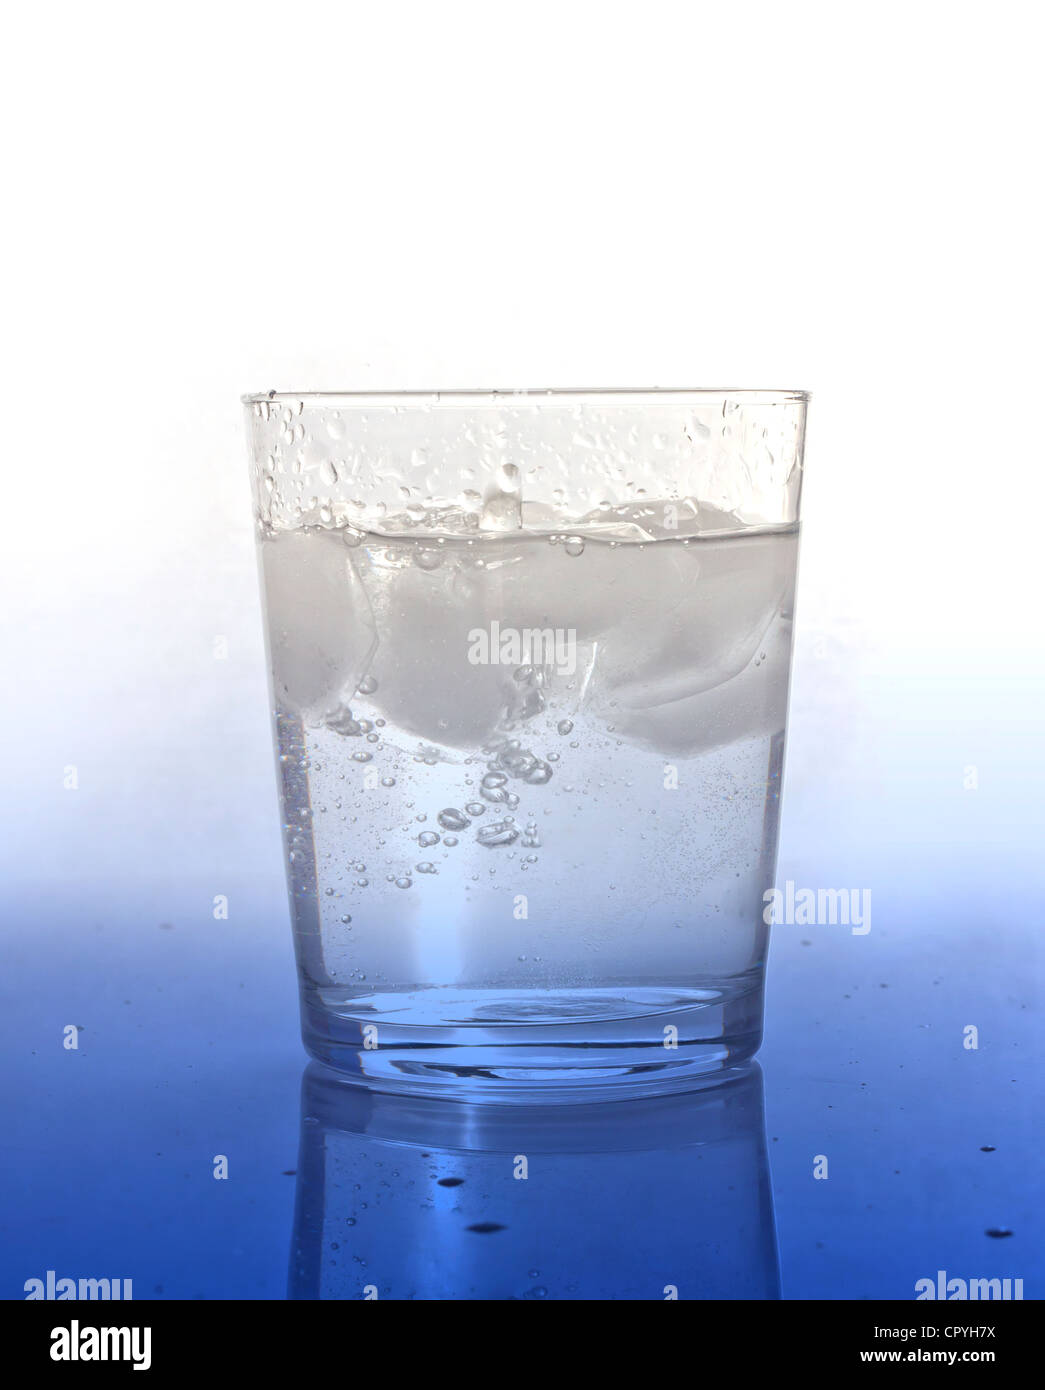 Лед всплывает в воде. Лед в стакане. Стакан воды со льдом. Лед плавает в стакане. Вода лед в стакане плавает.